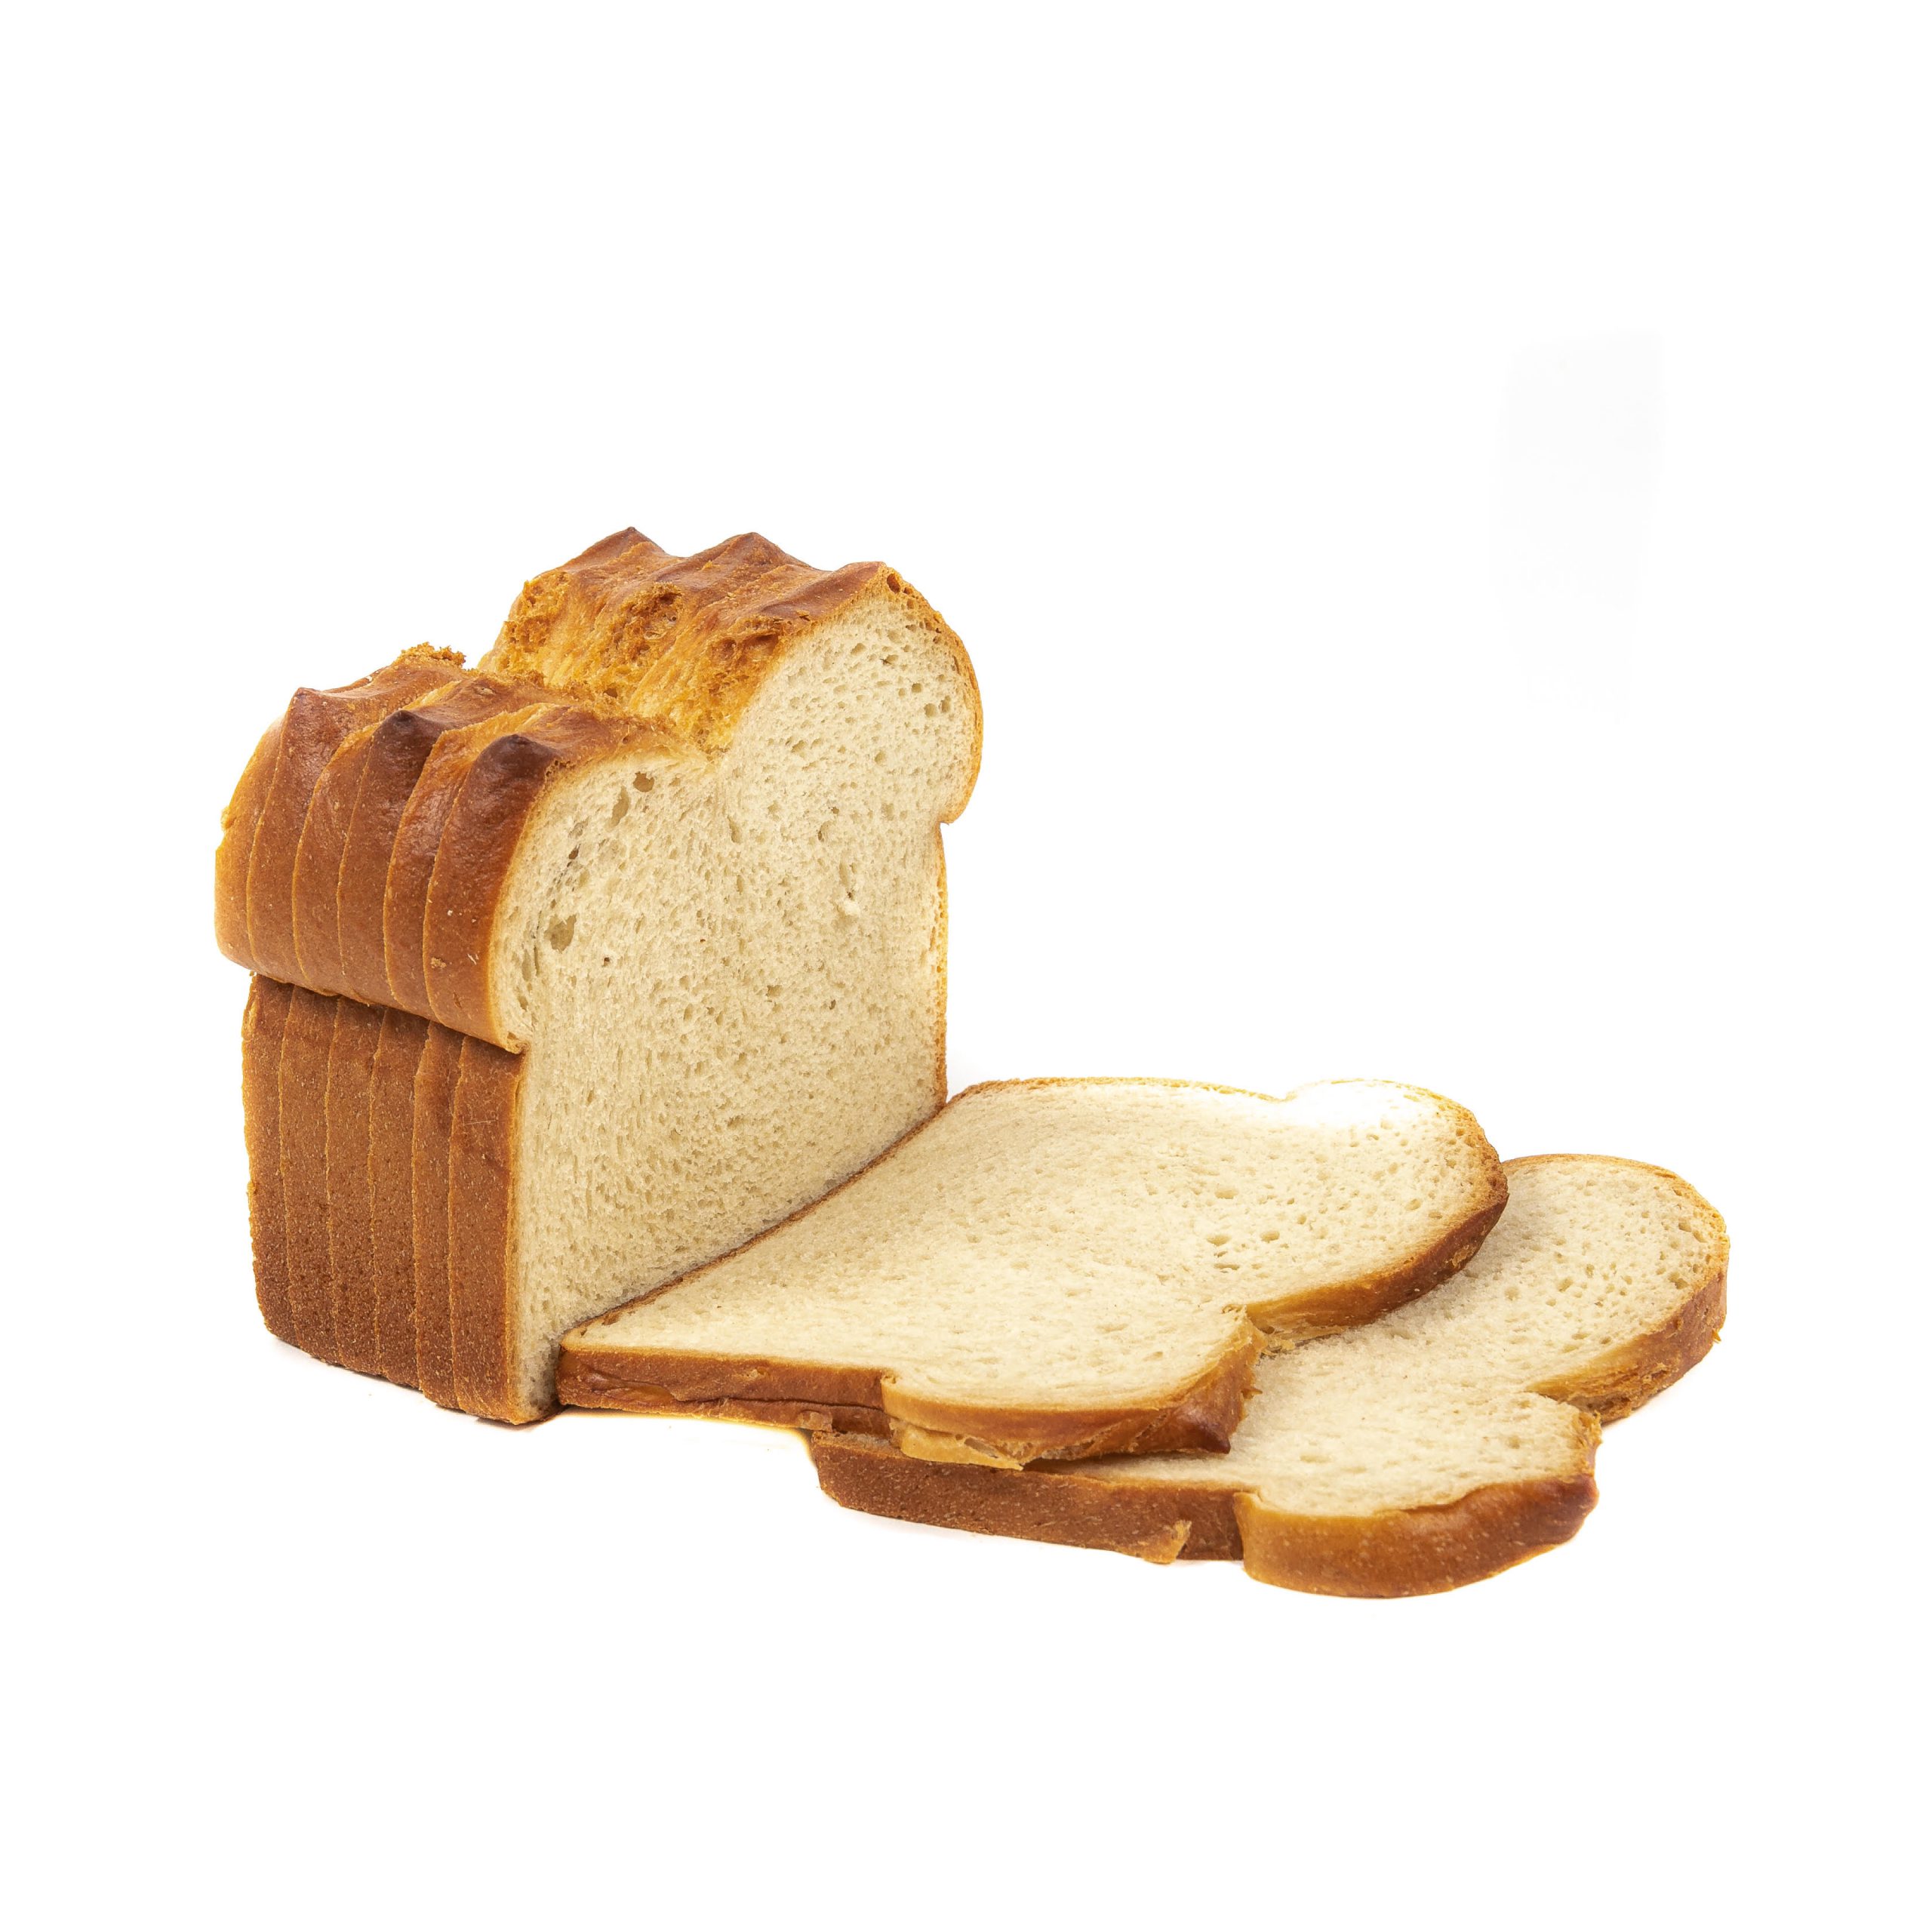 Zoet wit brood Innovation Bakeries